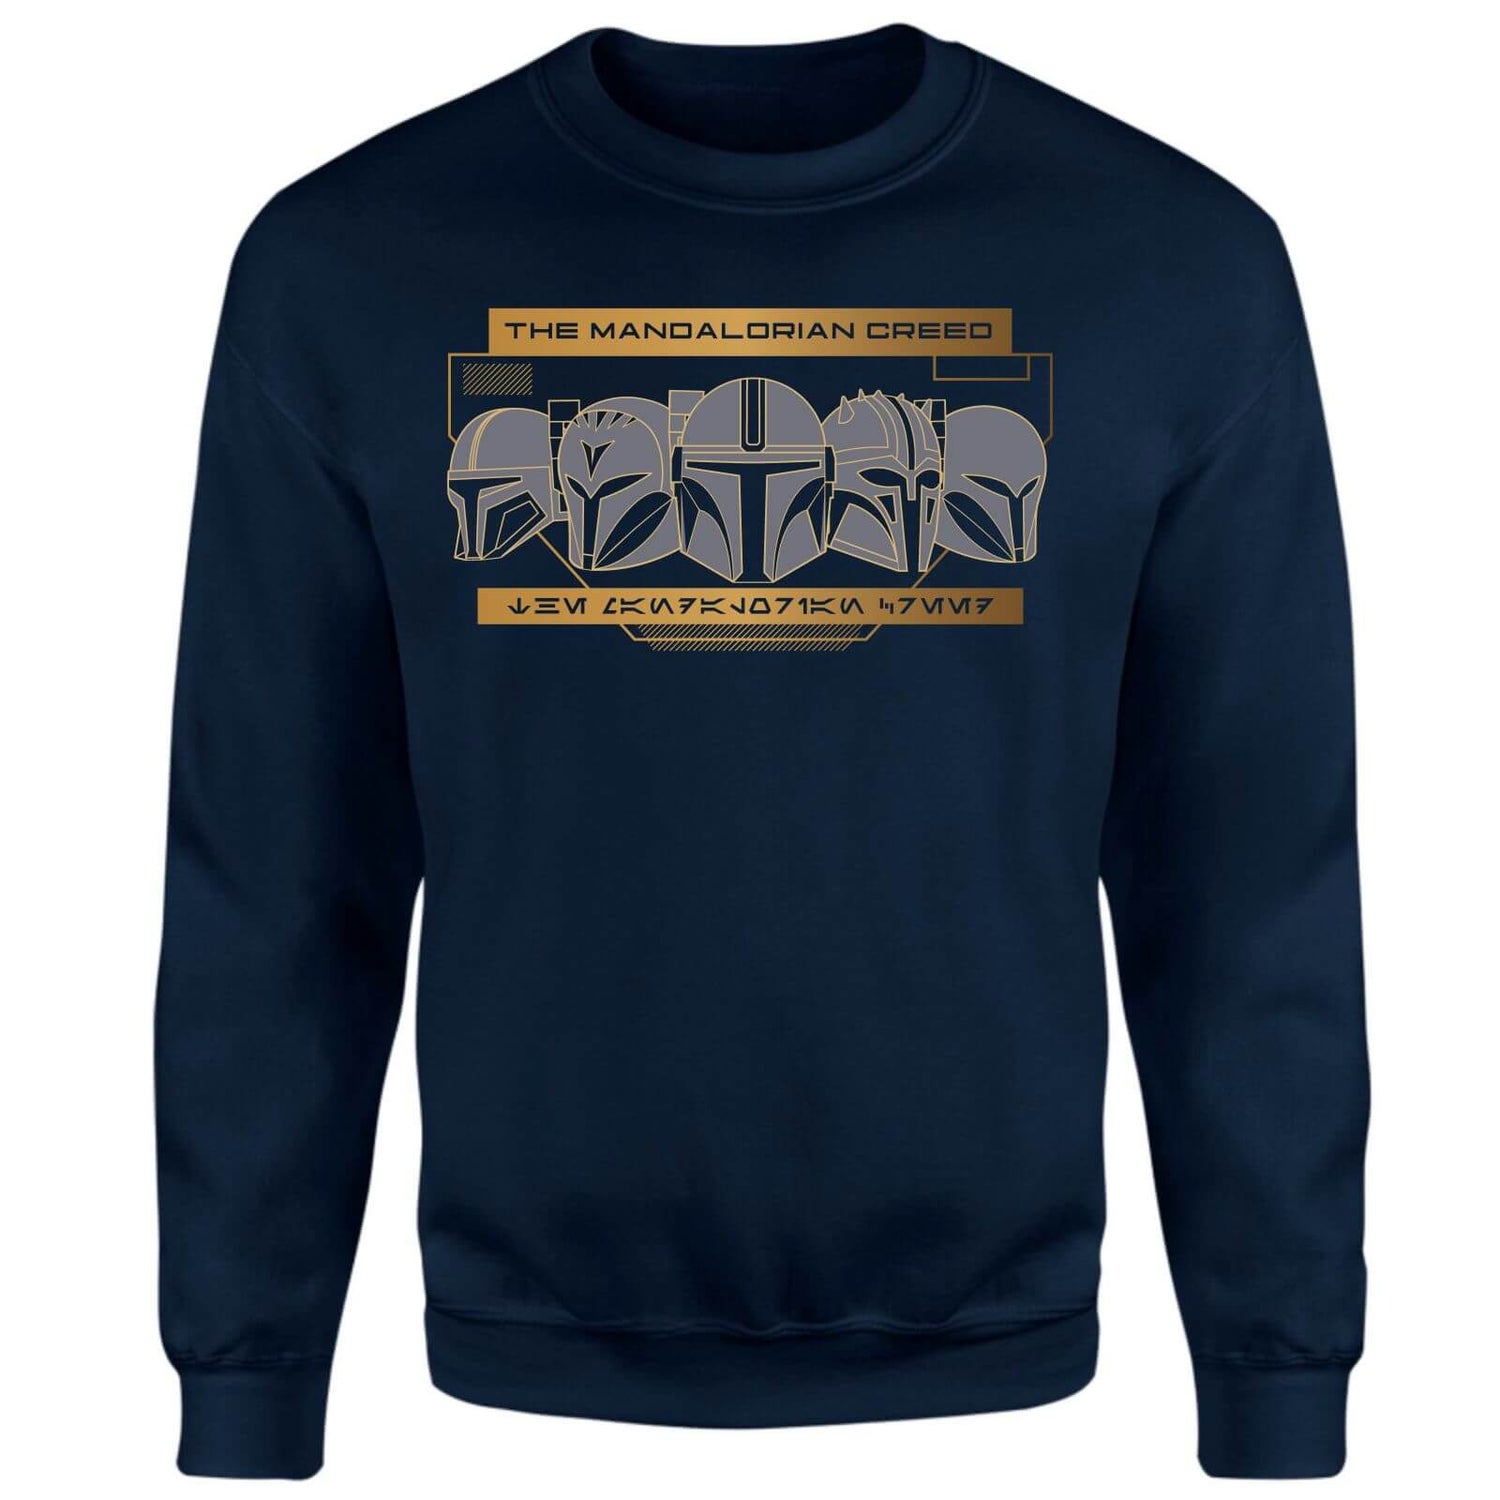 Star Wars The Mandalorian Creed Sweatshirt - Navy